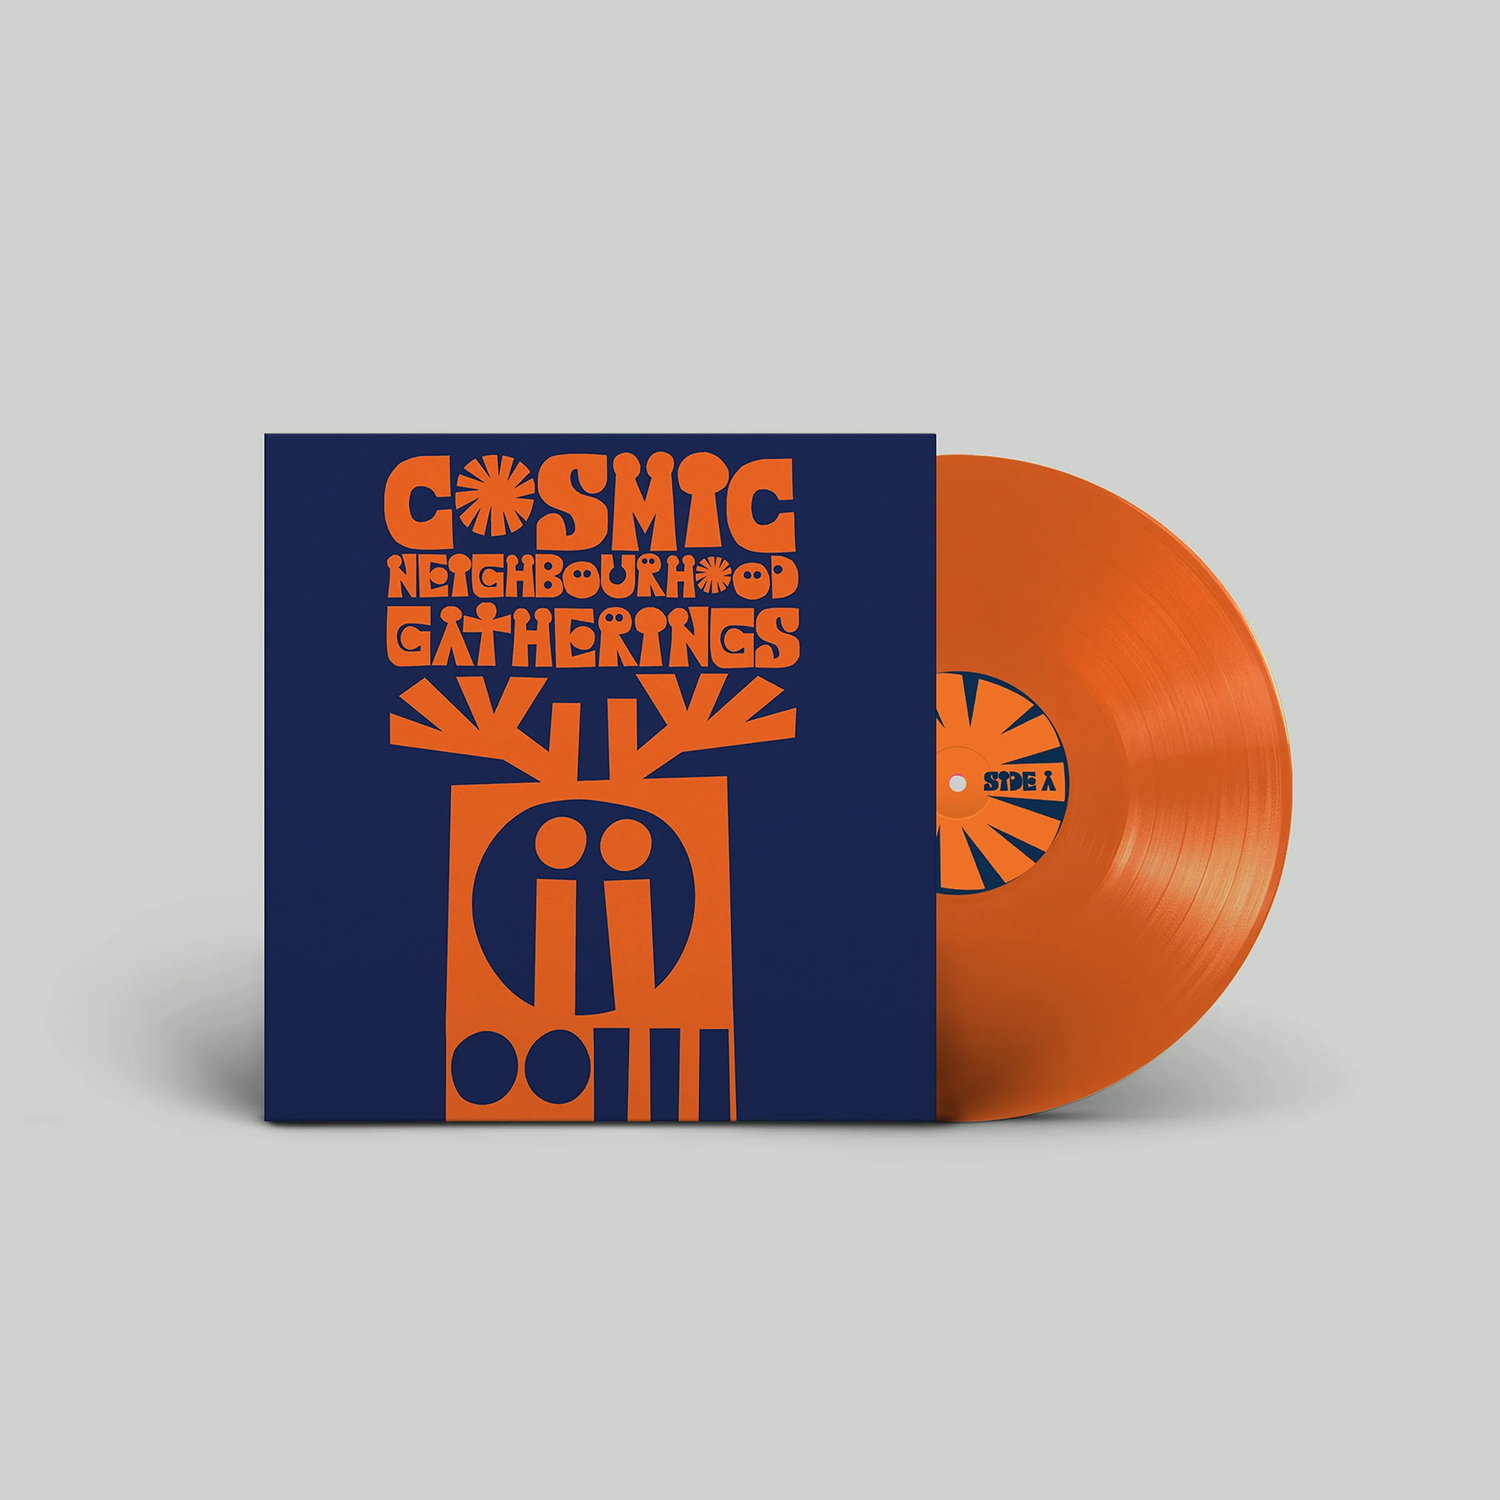 Gatherings: Limited Orange Vinyl LP